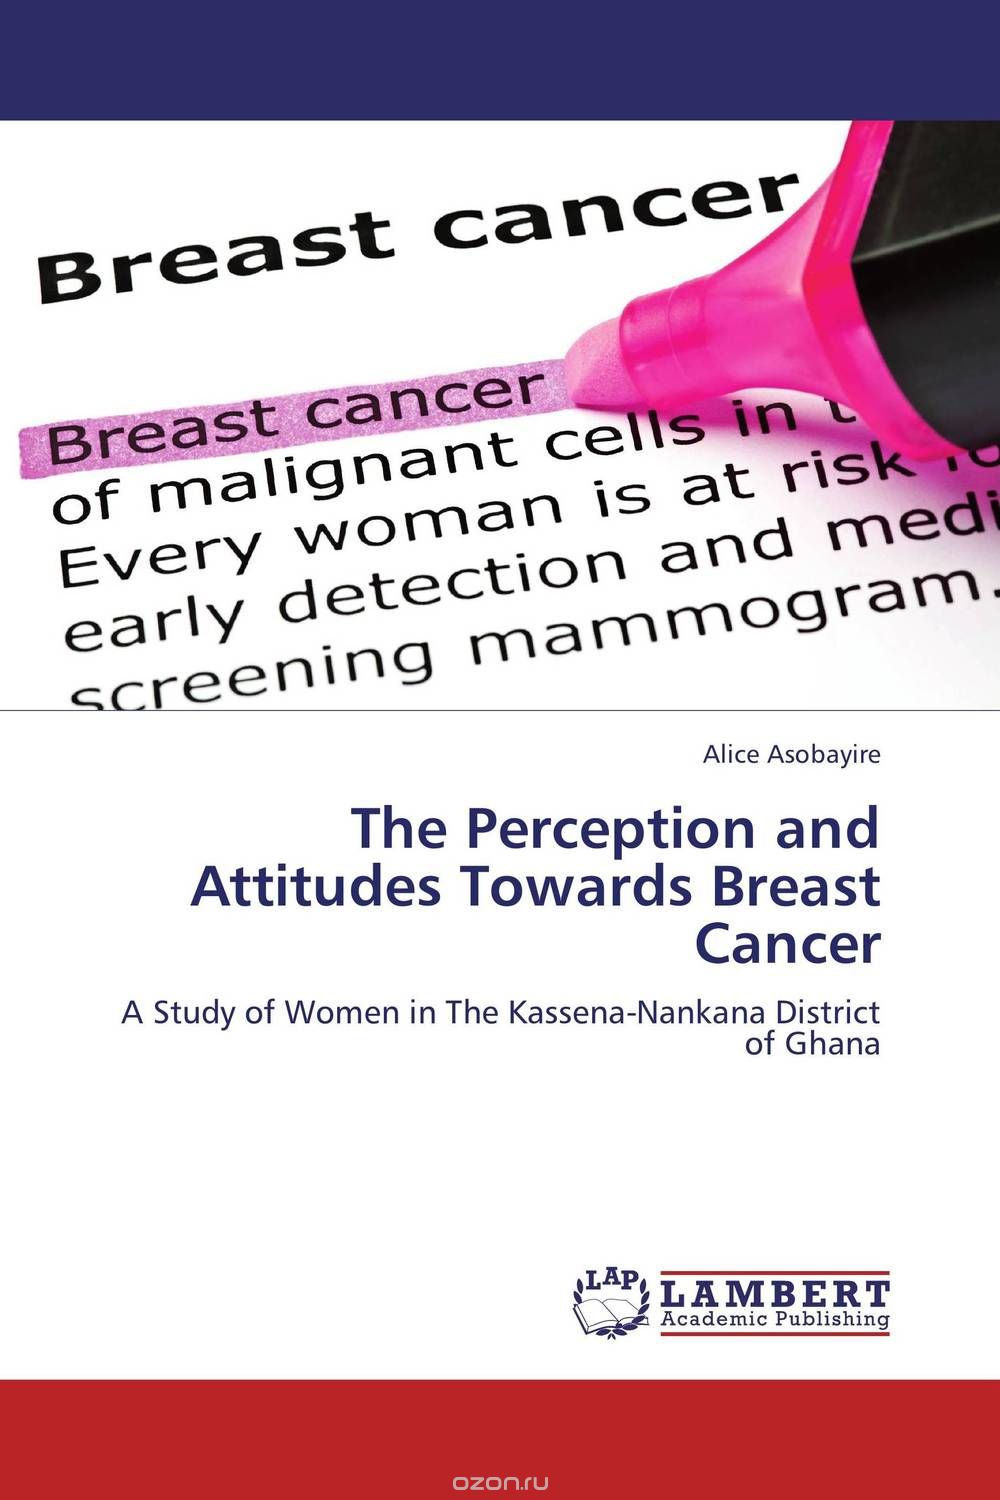 Скачать книгу "The Perception and Attitudes Towards Breast Cancer"